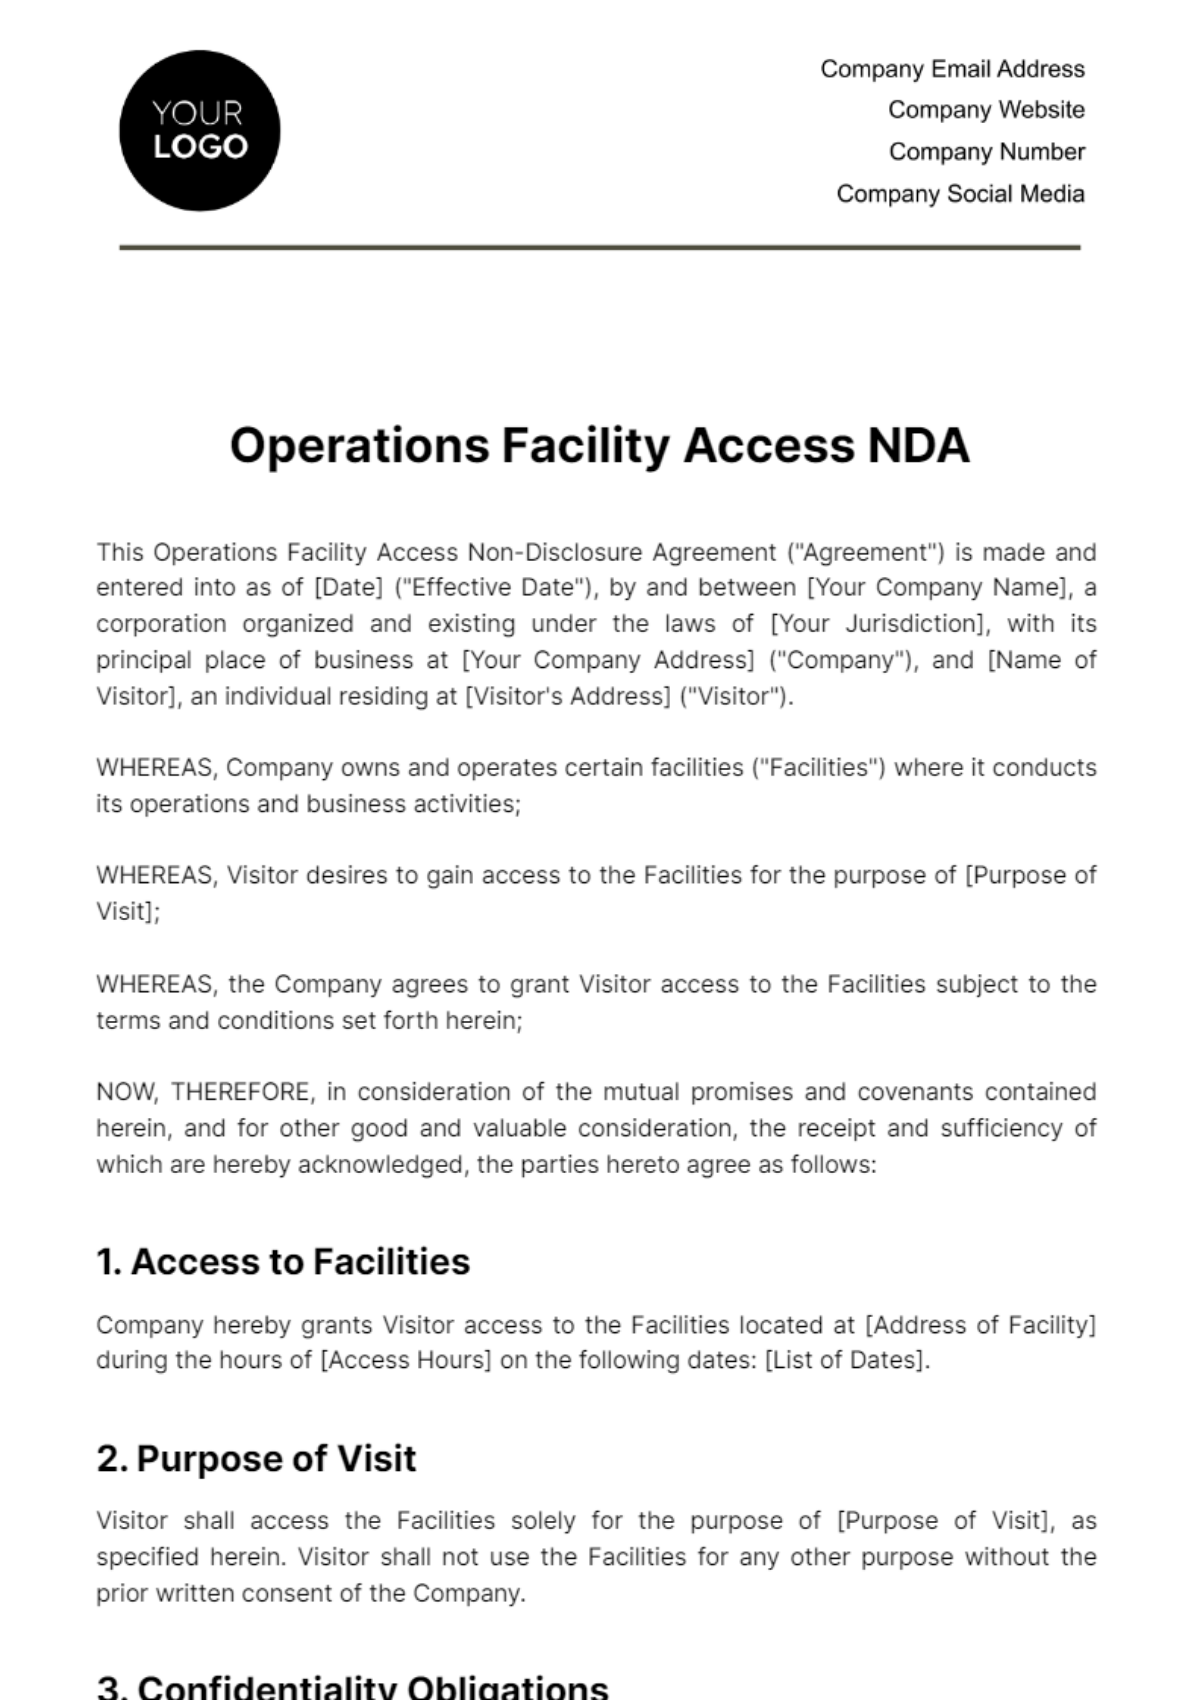 Operations Facility Access NDA Template